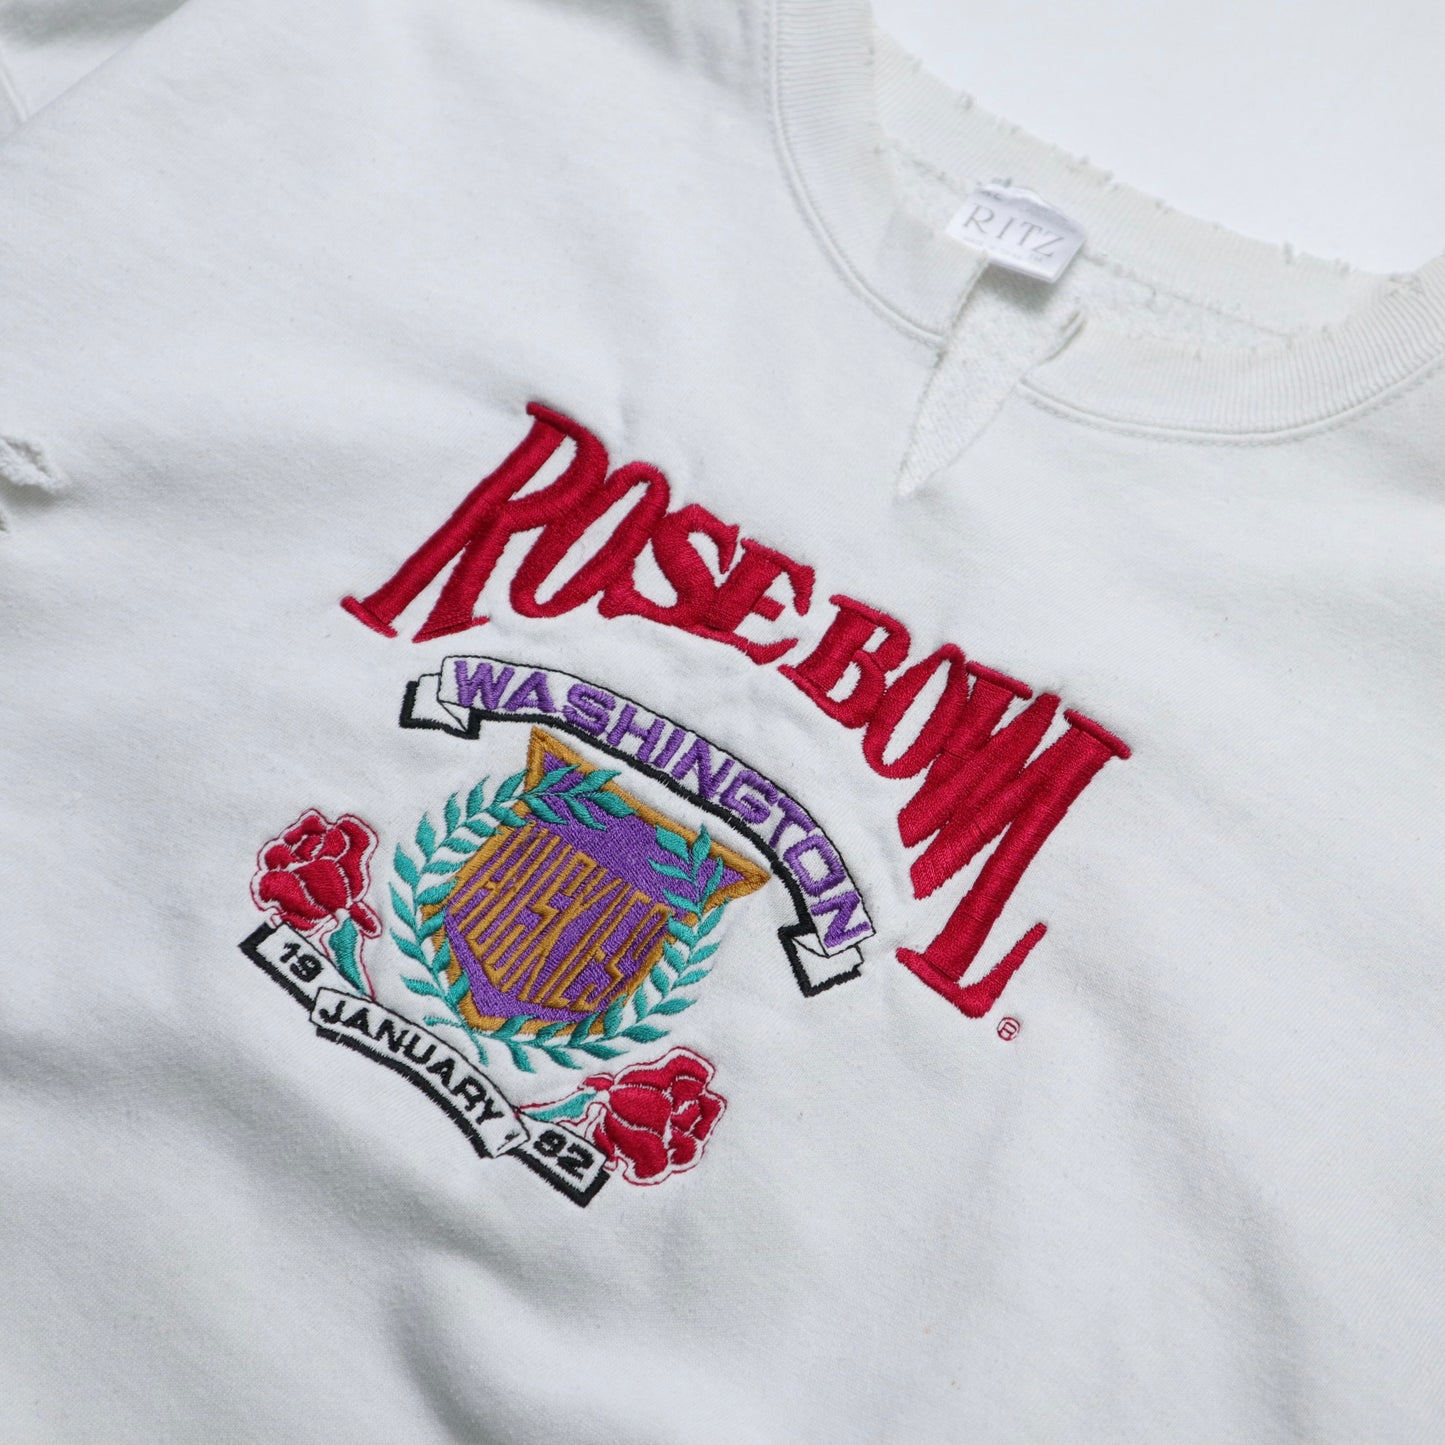 90s ROSE BOWL embroidered totem destruction sweatshirt college tee